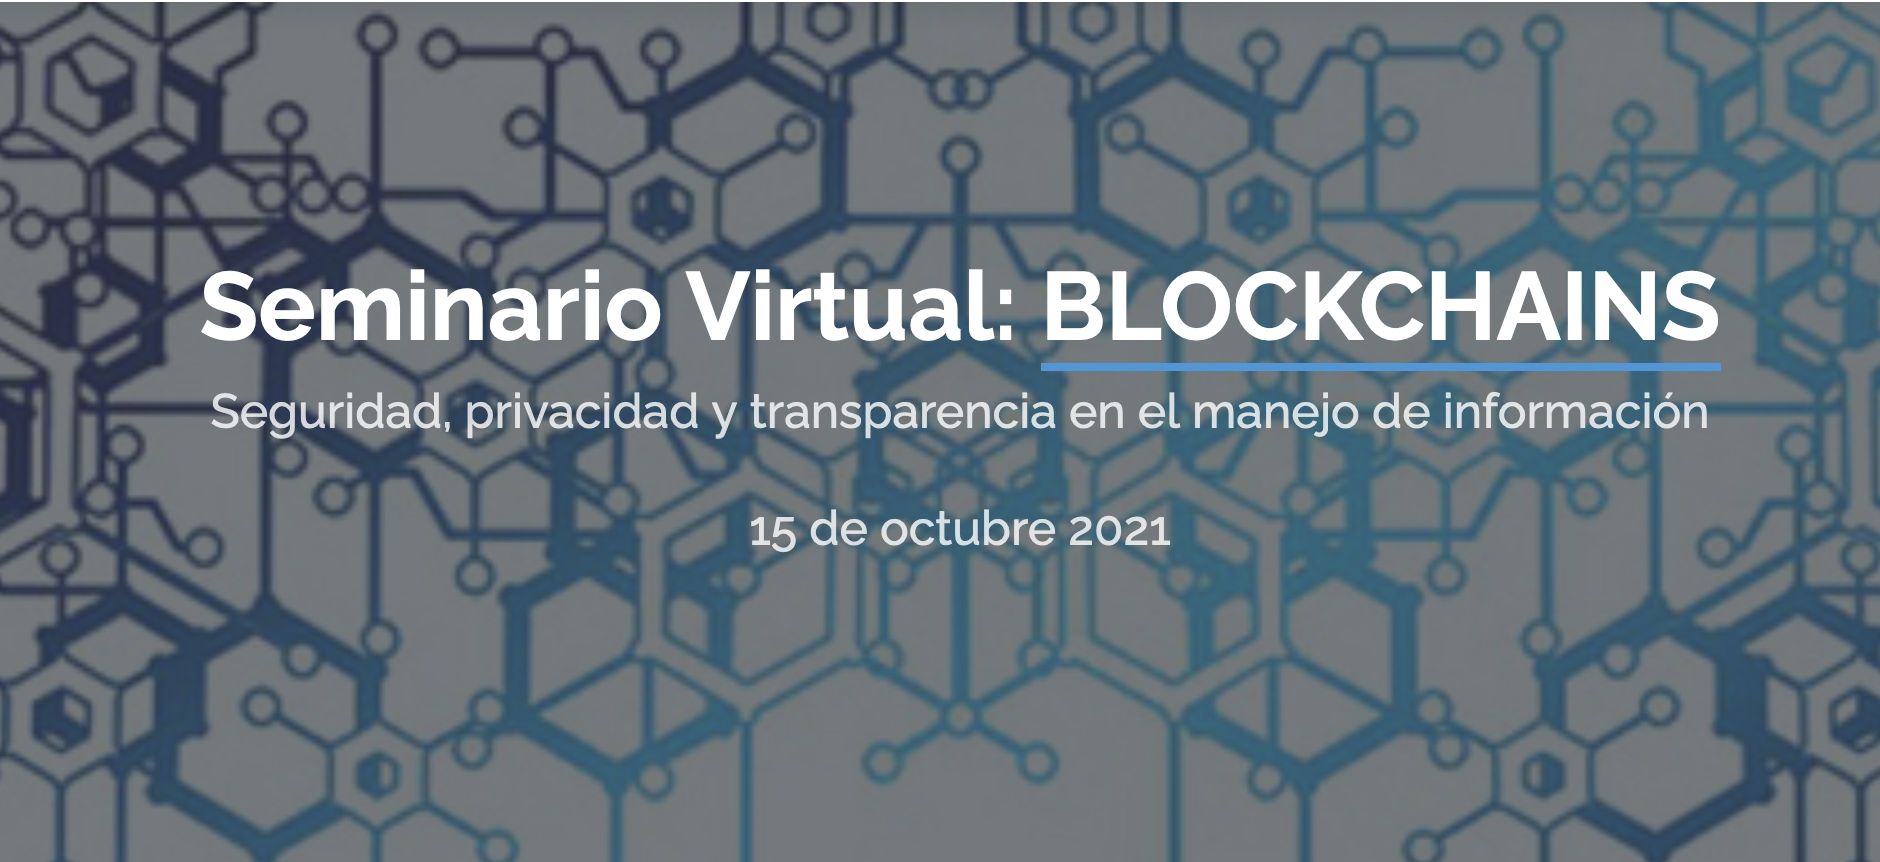 images/eventos/seminario-virtual-blockchains.png